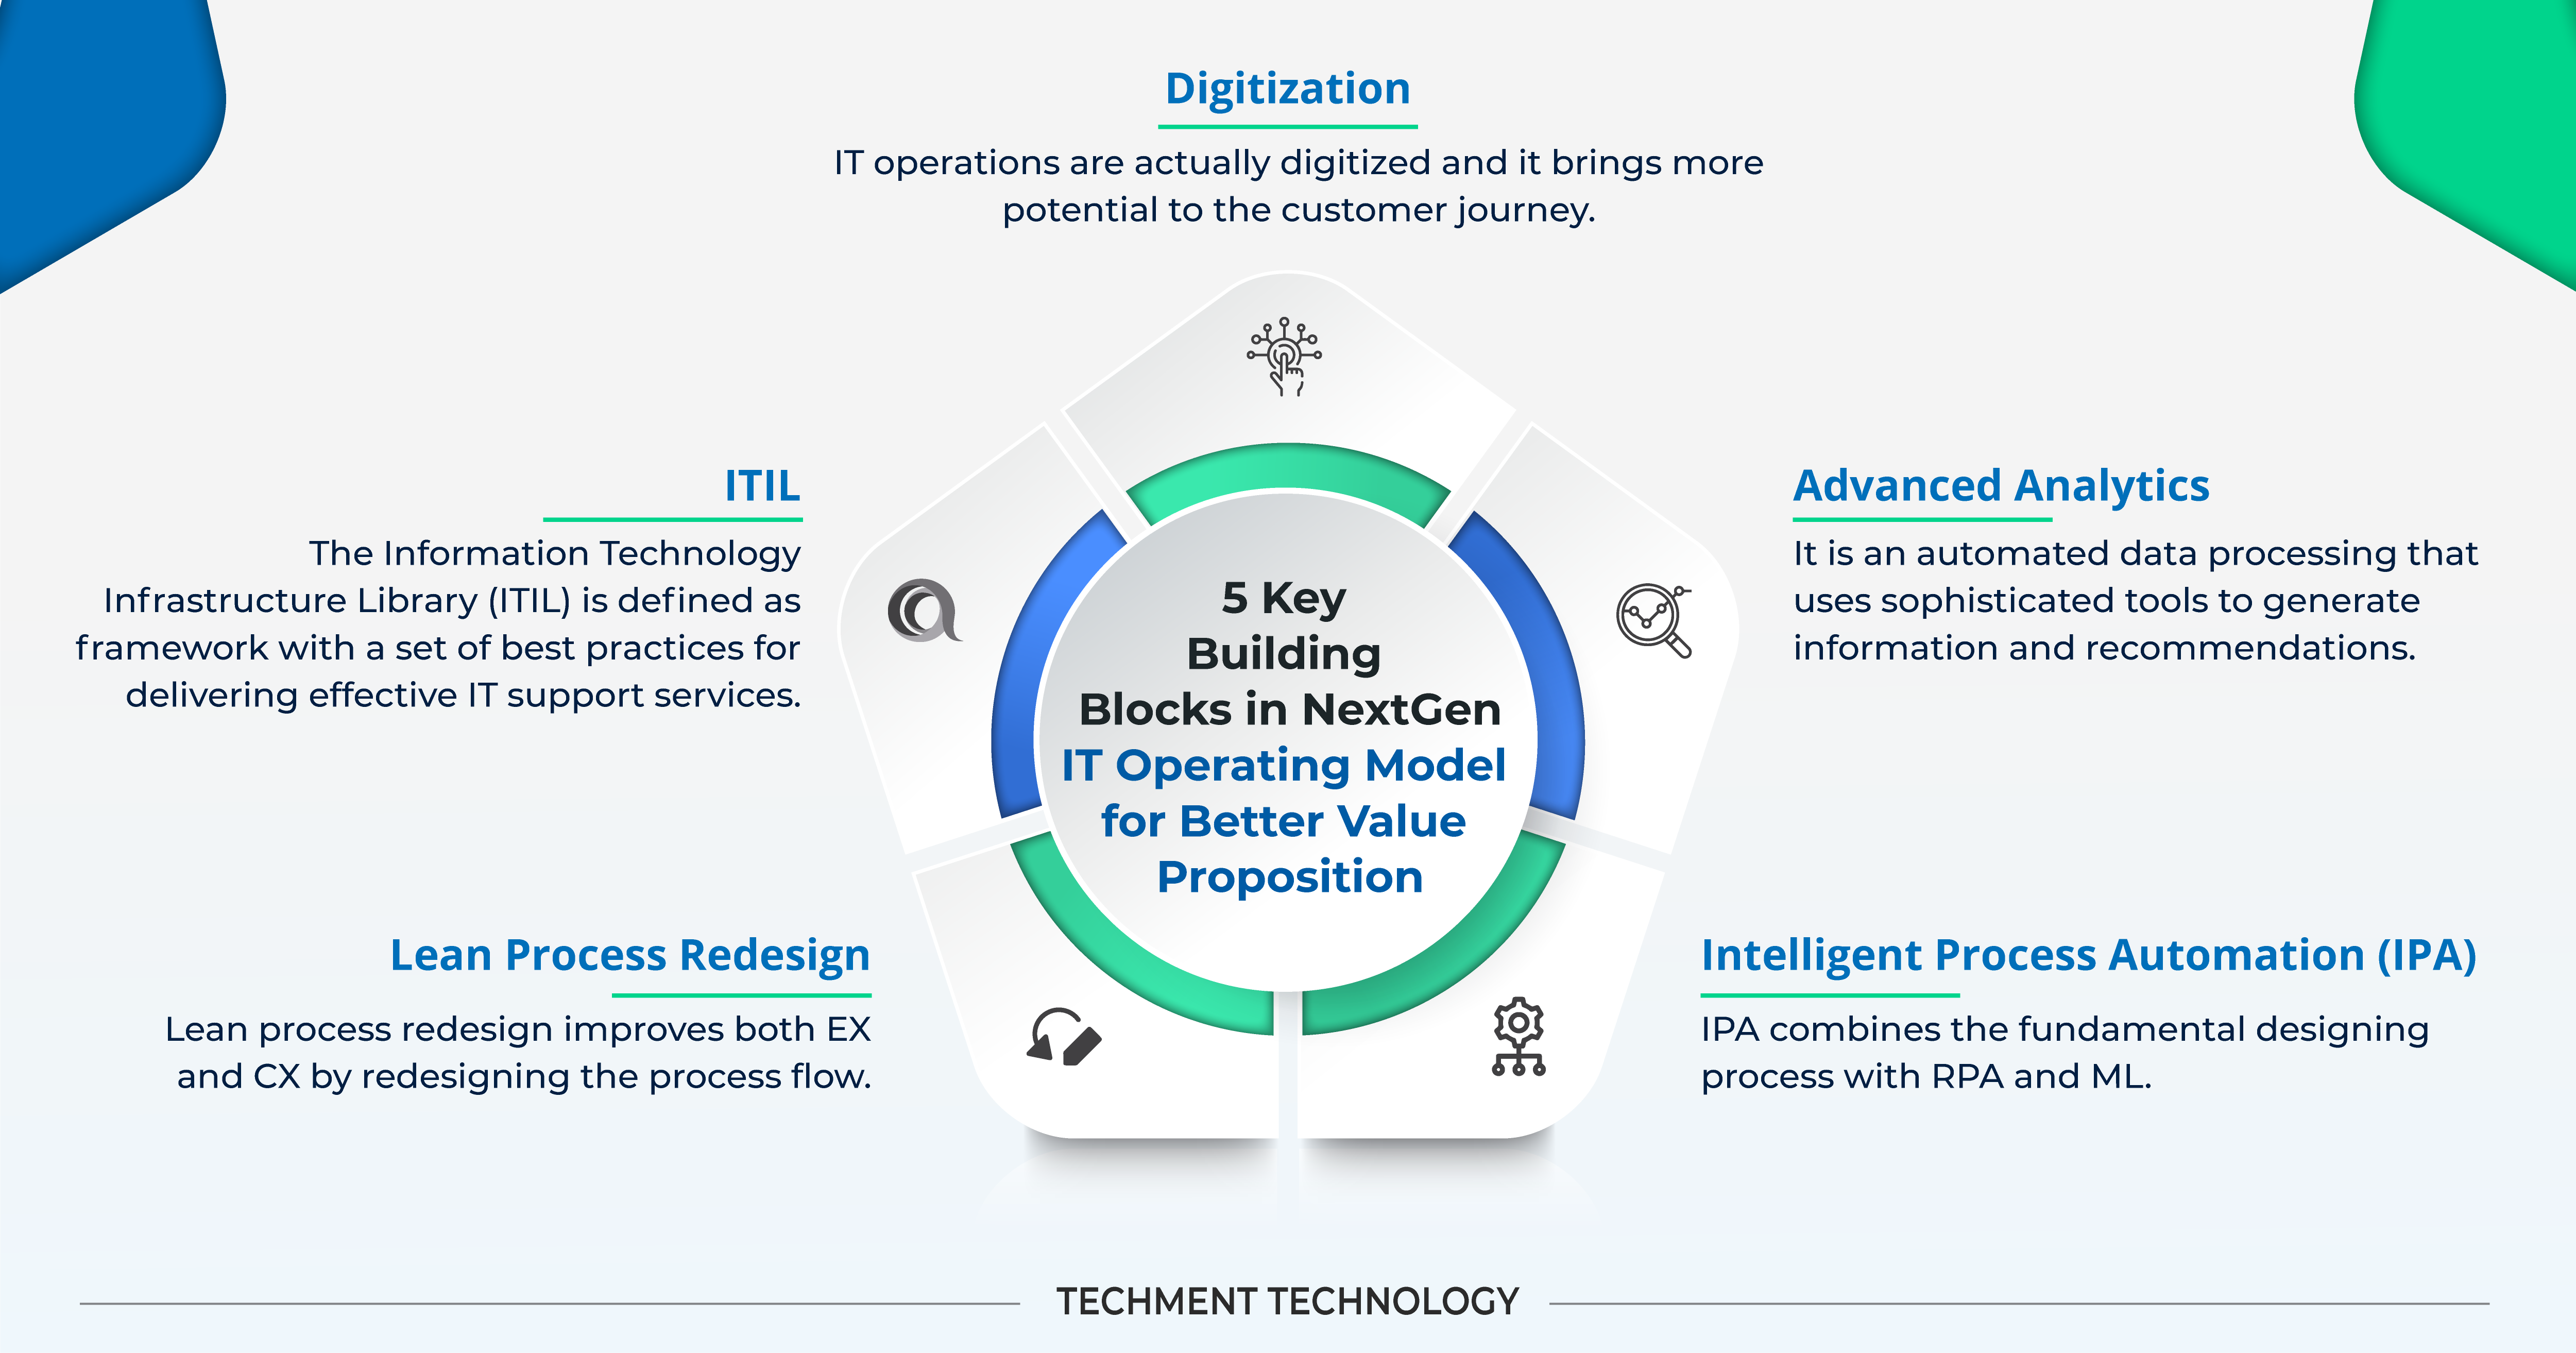 5 Key Building Blocks in NextGen IT Operating Model for Better Value Proposition